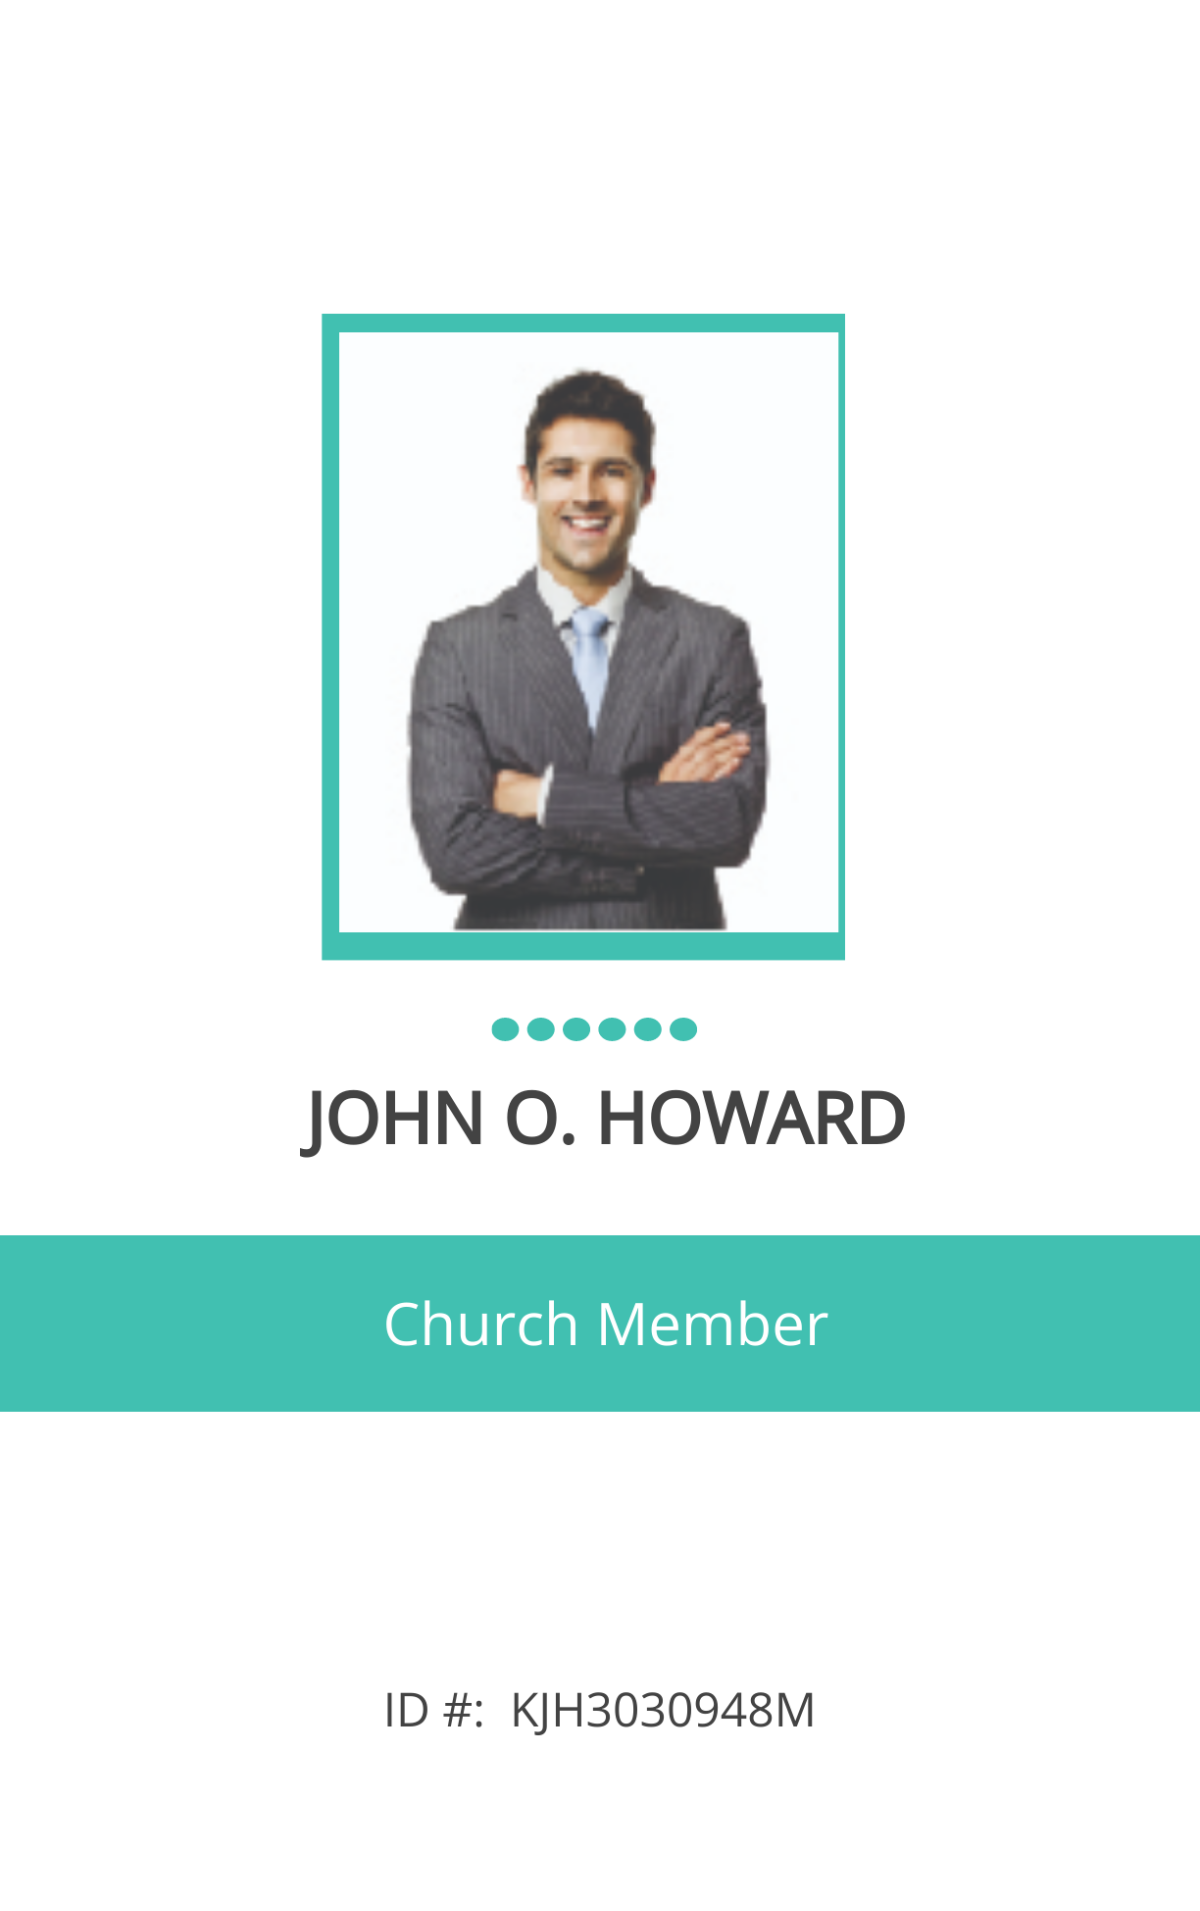 Printable Church ID Card Template